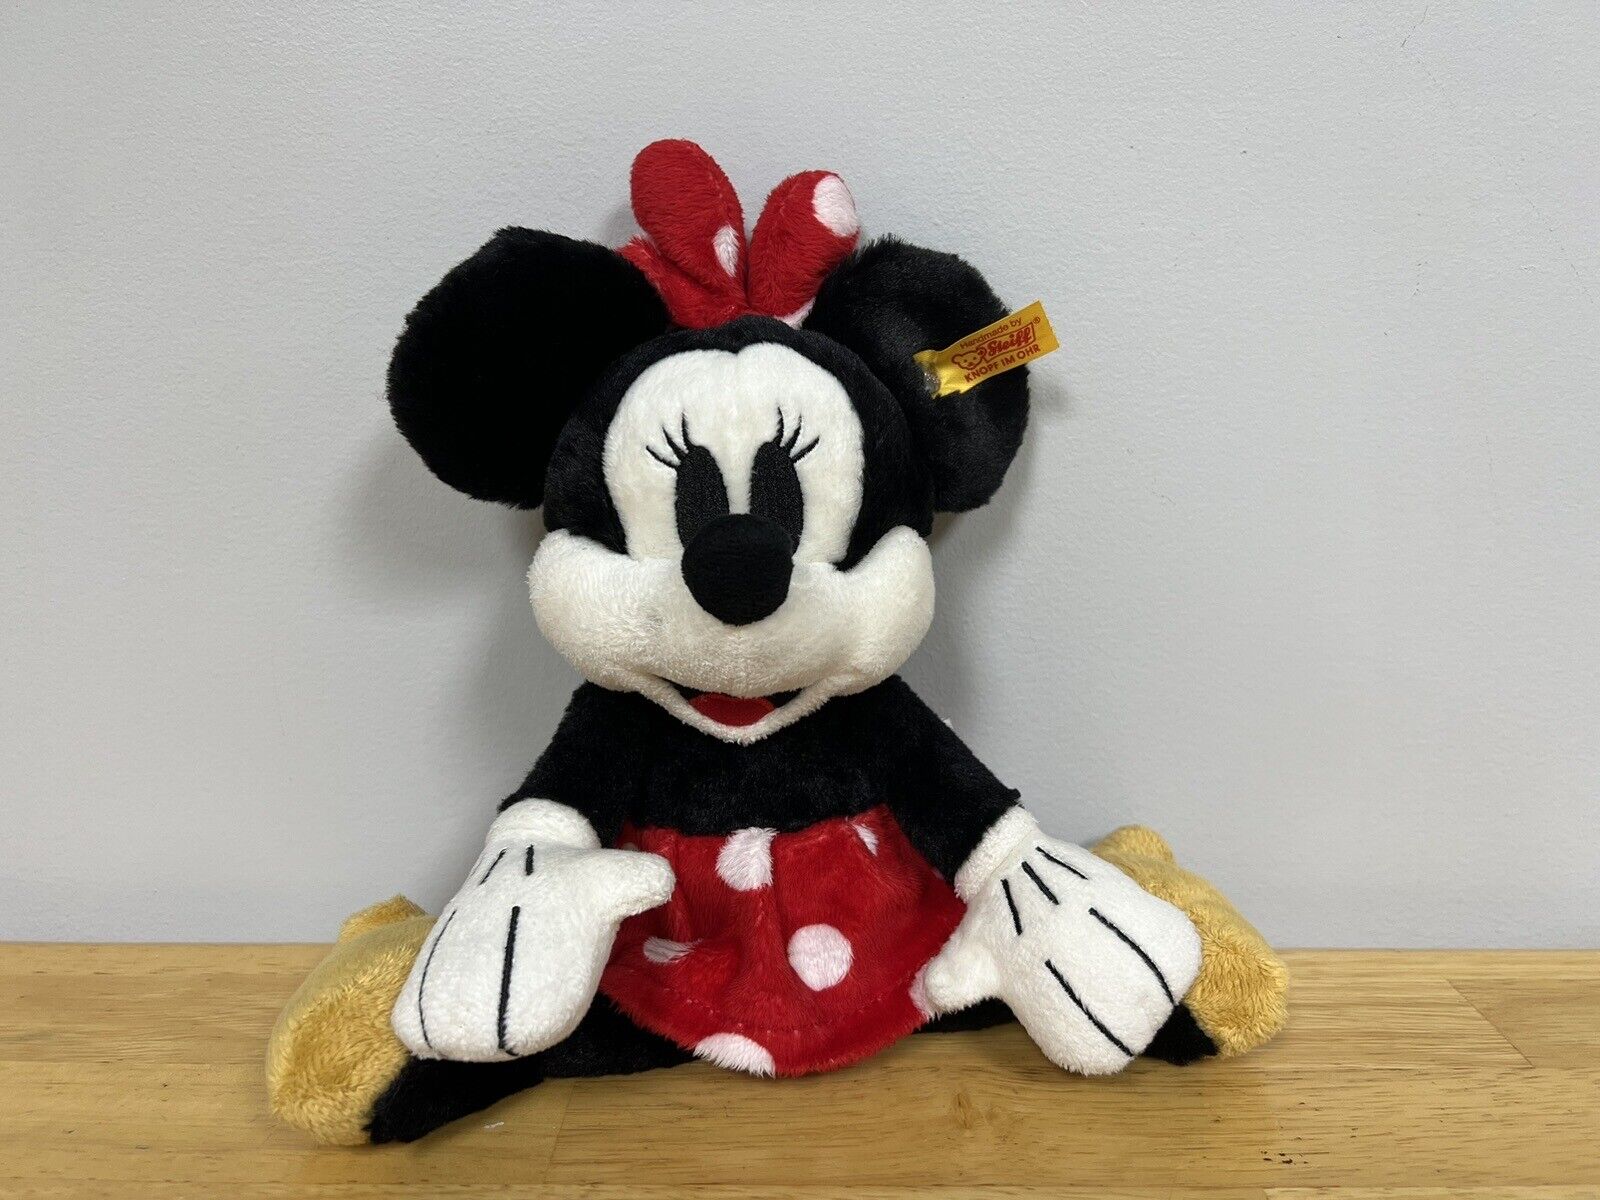 Minnie Mouse Plush by Steiff x Disney Originals 024511 12”